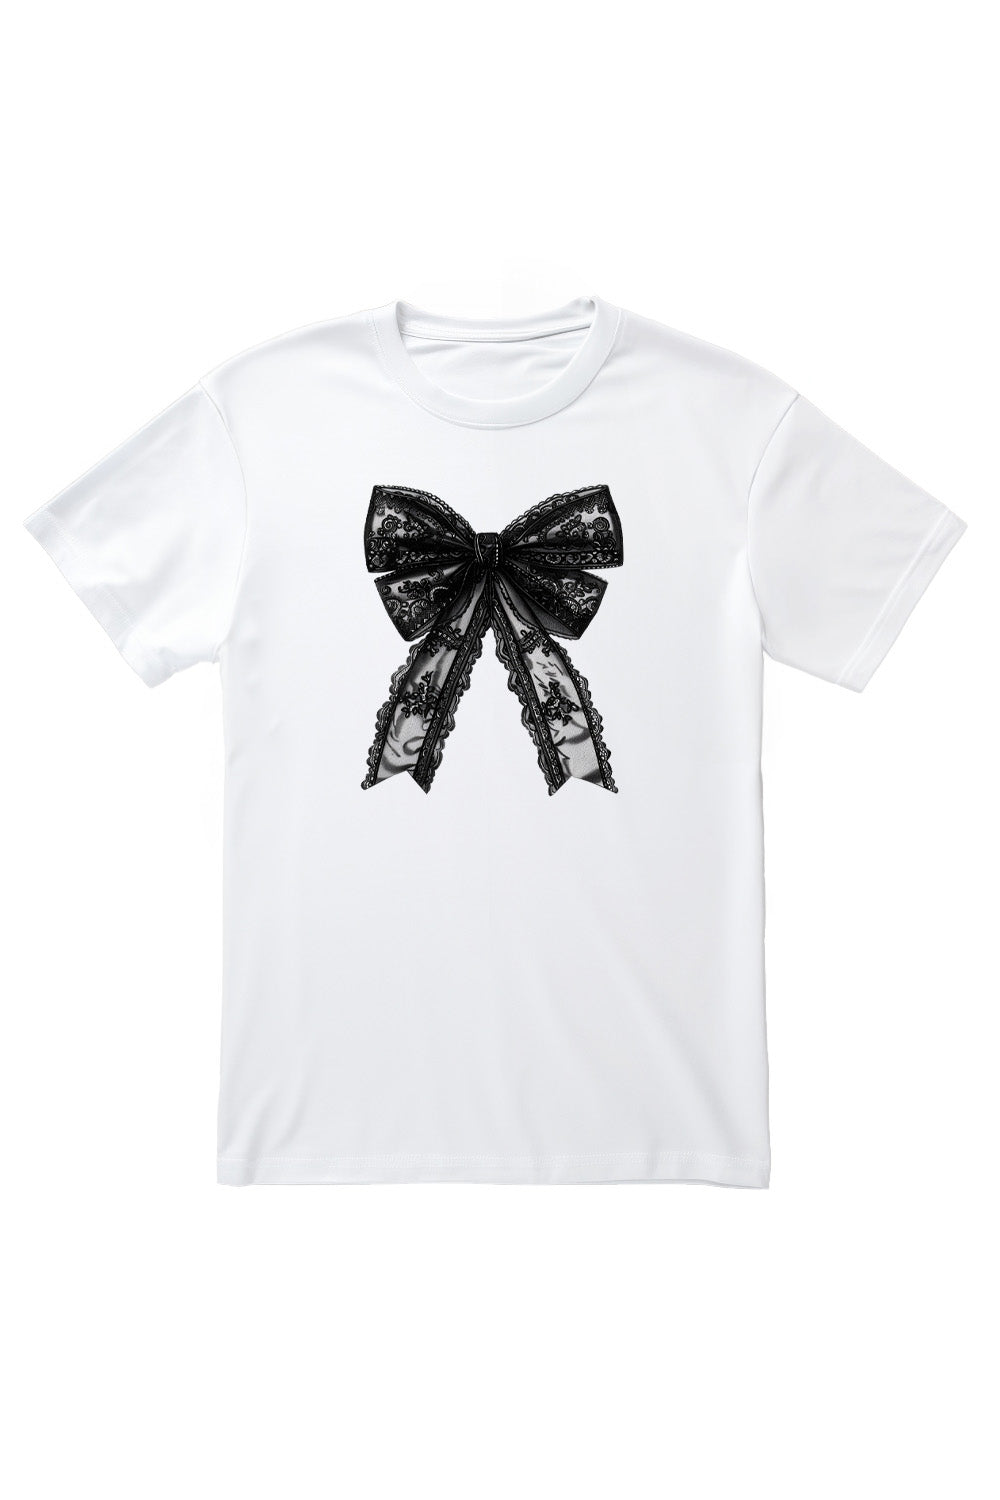 Black Lace Bow T-Shirt in White (Custom Packs)